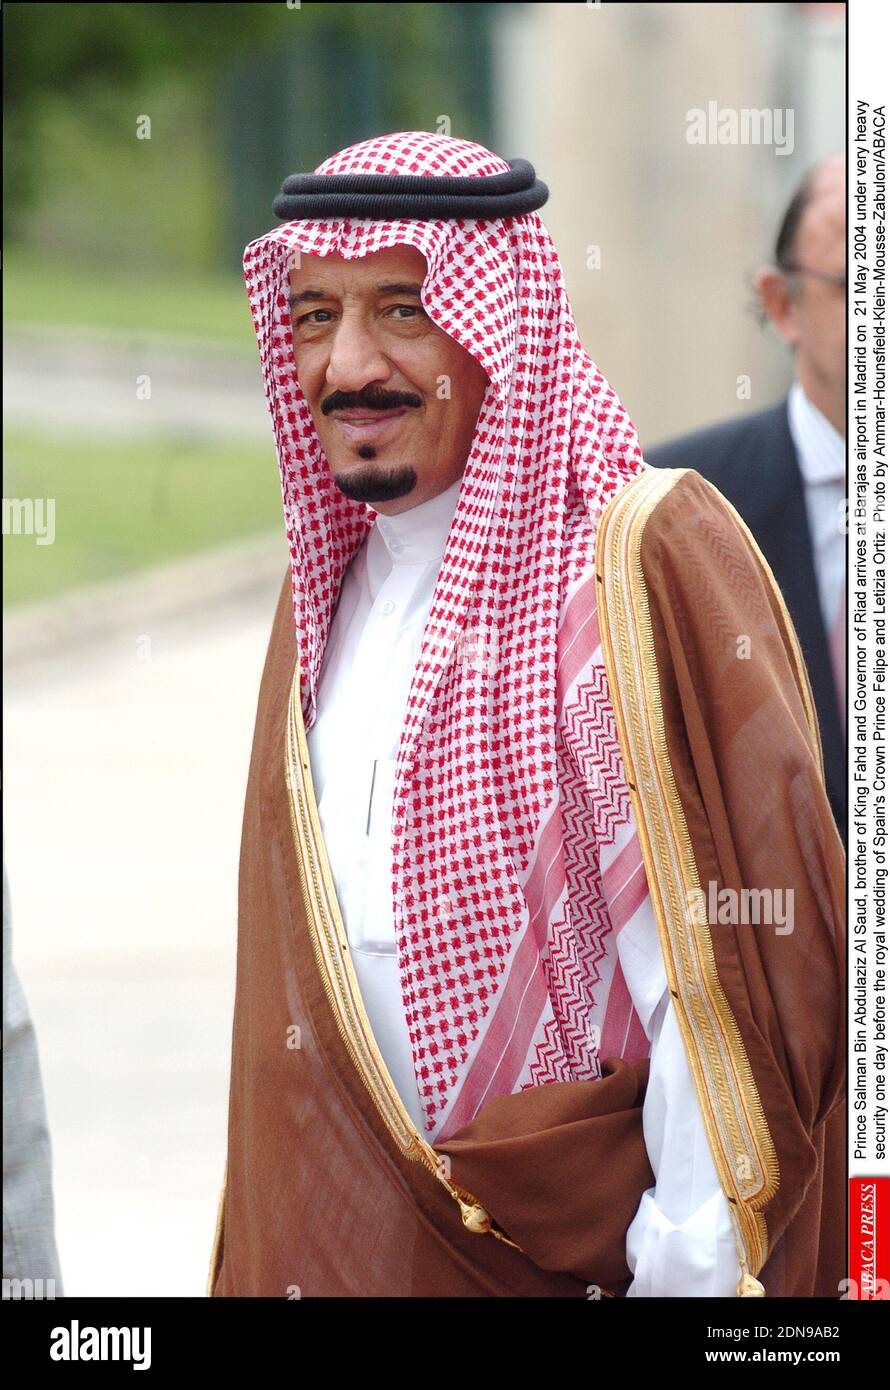 File photo - Salman Bin Abdulaziz Al Saud becomes New Saudi King after King  Abdullah bin Abdulaziz has died, royal officials have announced, weeks  after he was admitted to hospital. King Abdullah,